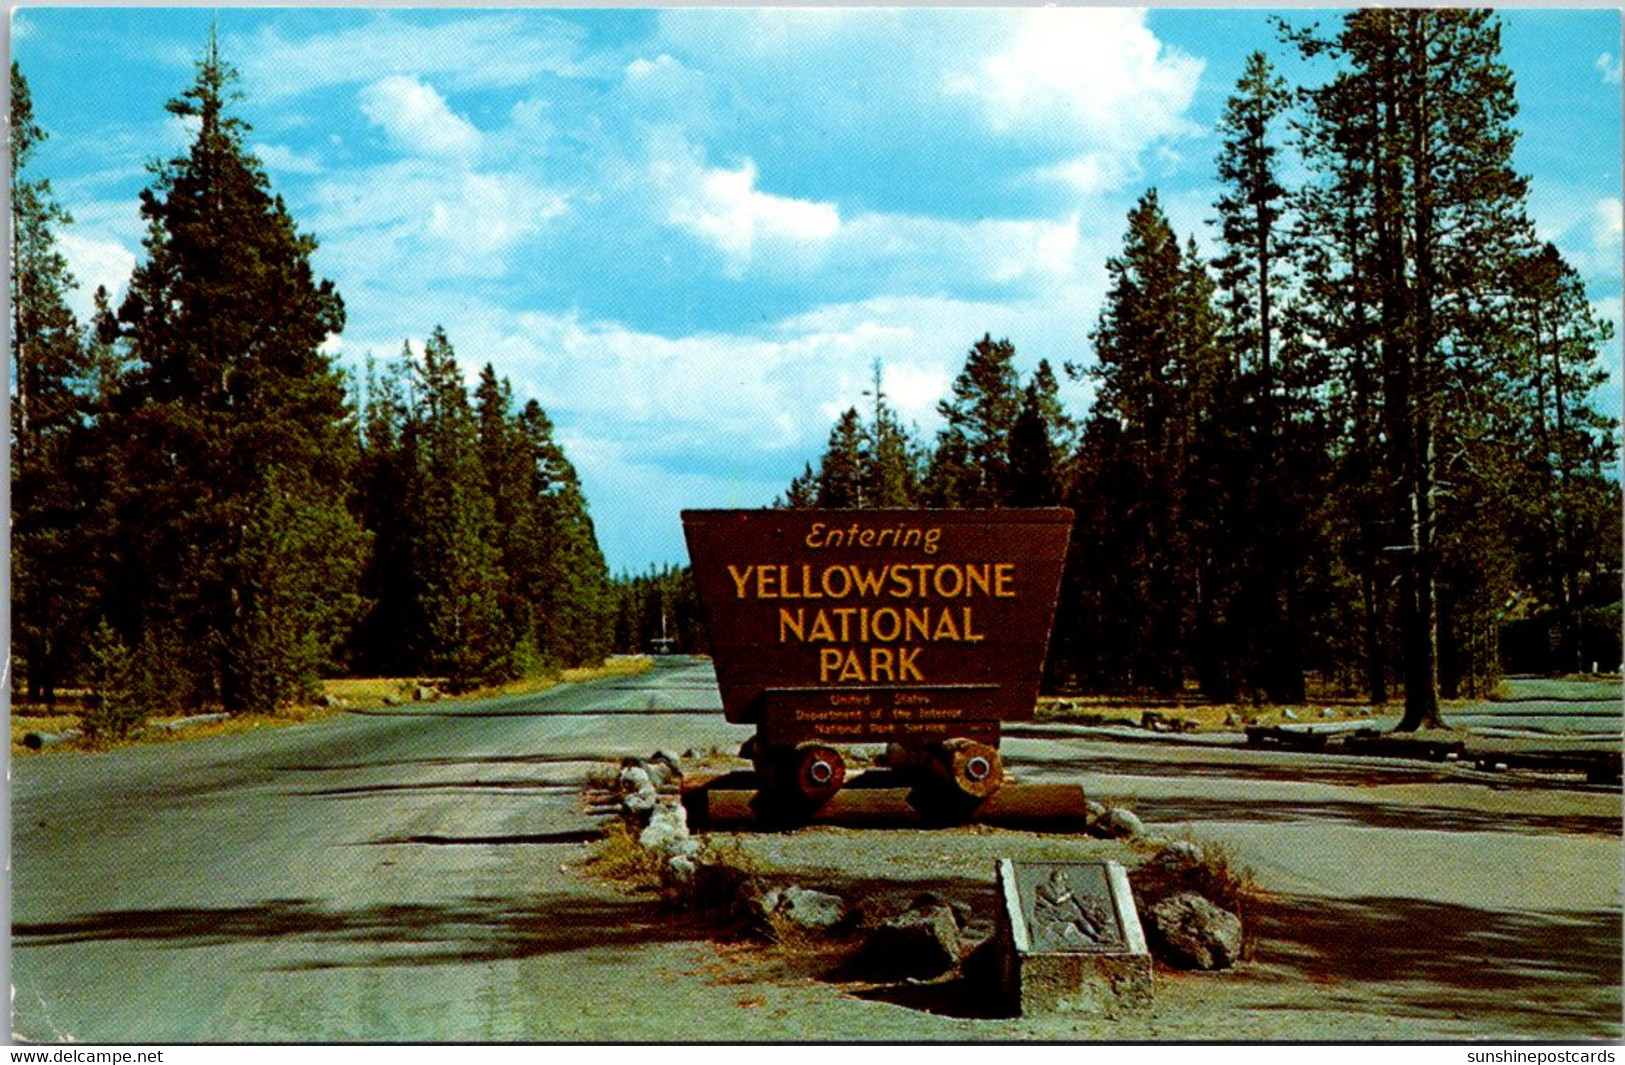 Yellowstone National Park Entrance Roadside Marker - USA National Parks